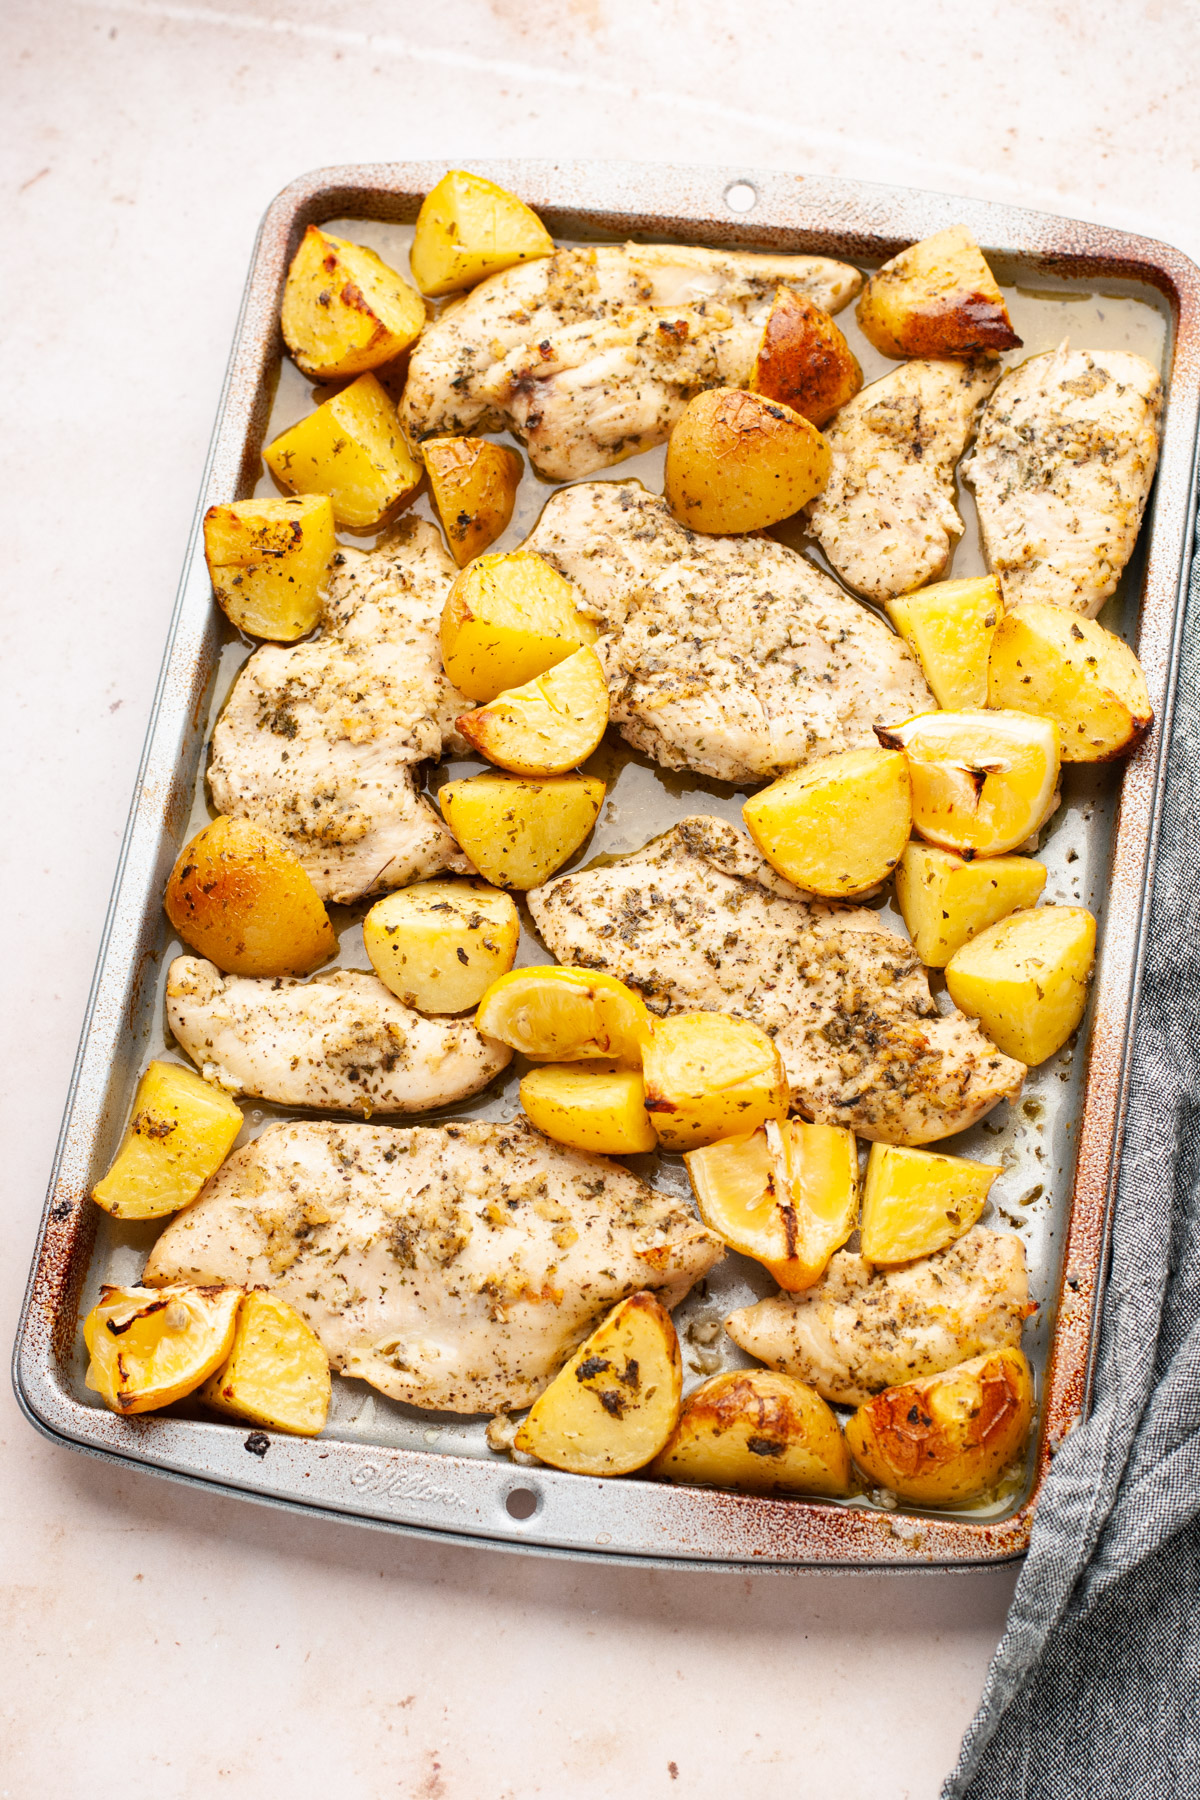 Lemon chicken and potatoes on a sheet pan.